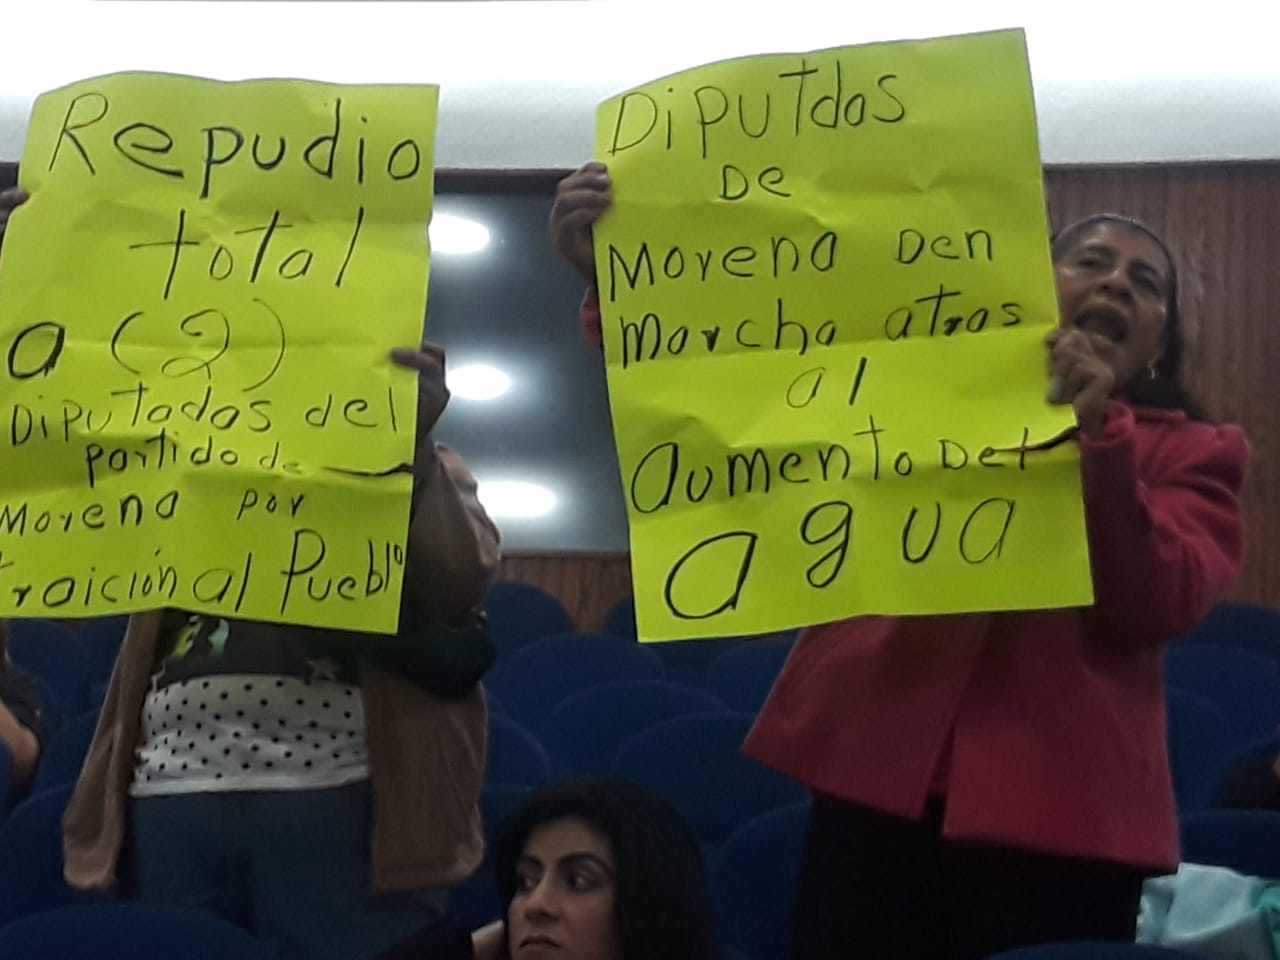  Militantes de Morena protestan contra diputados de su partido (Video)